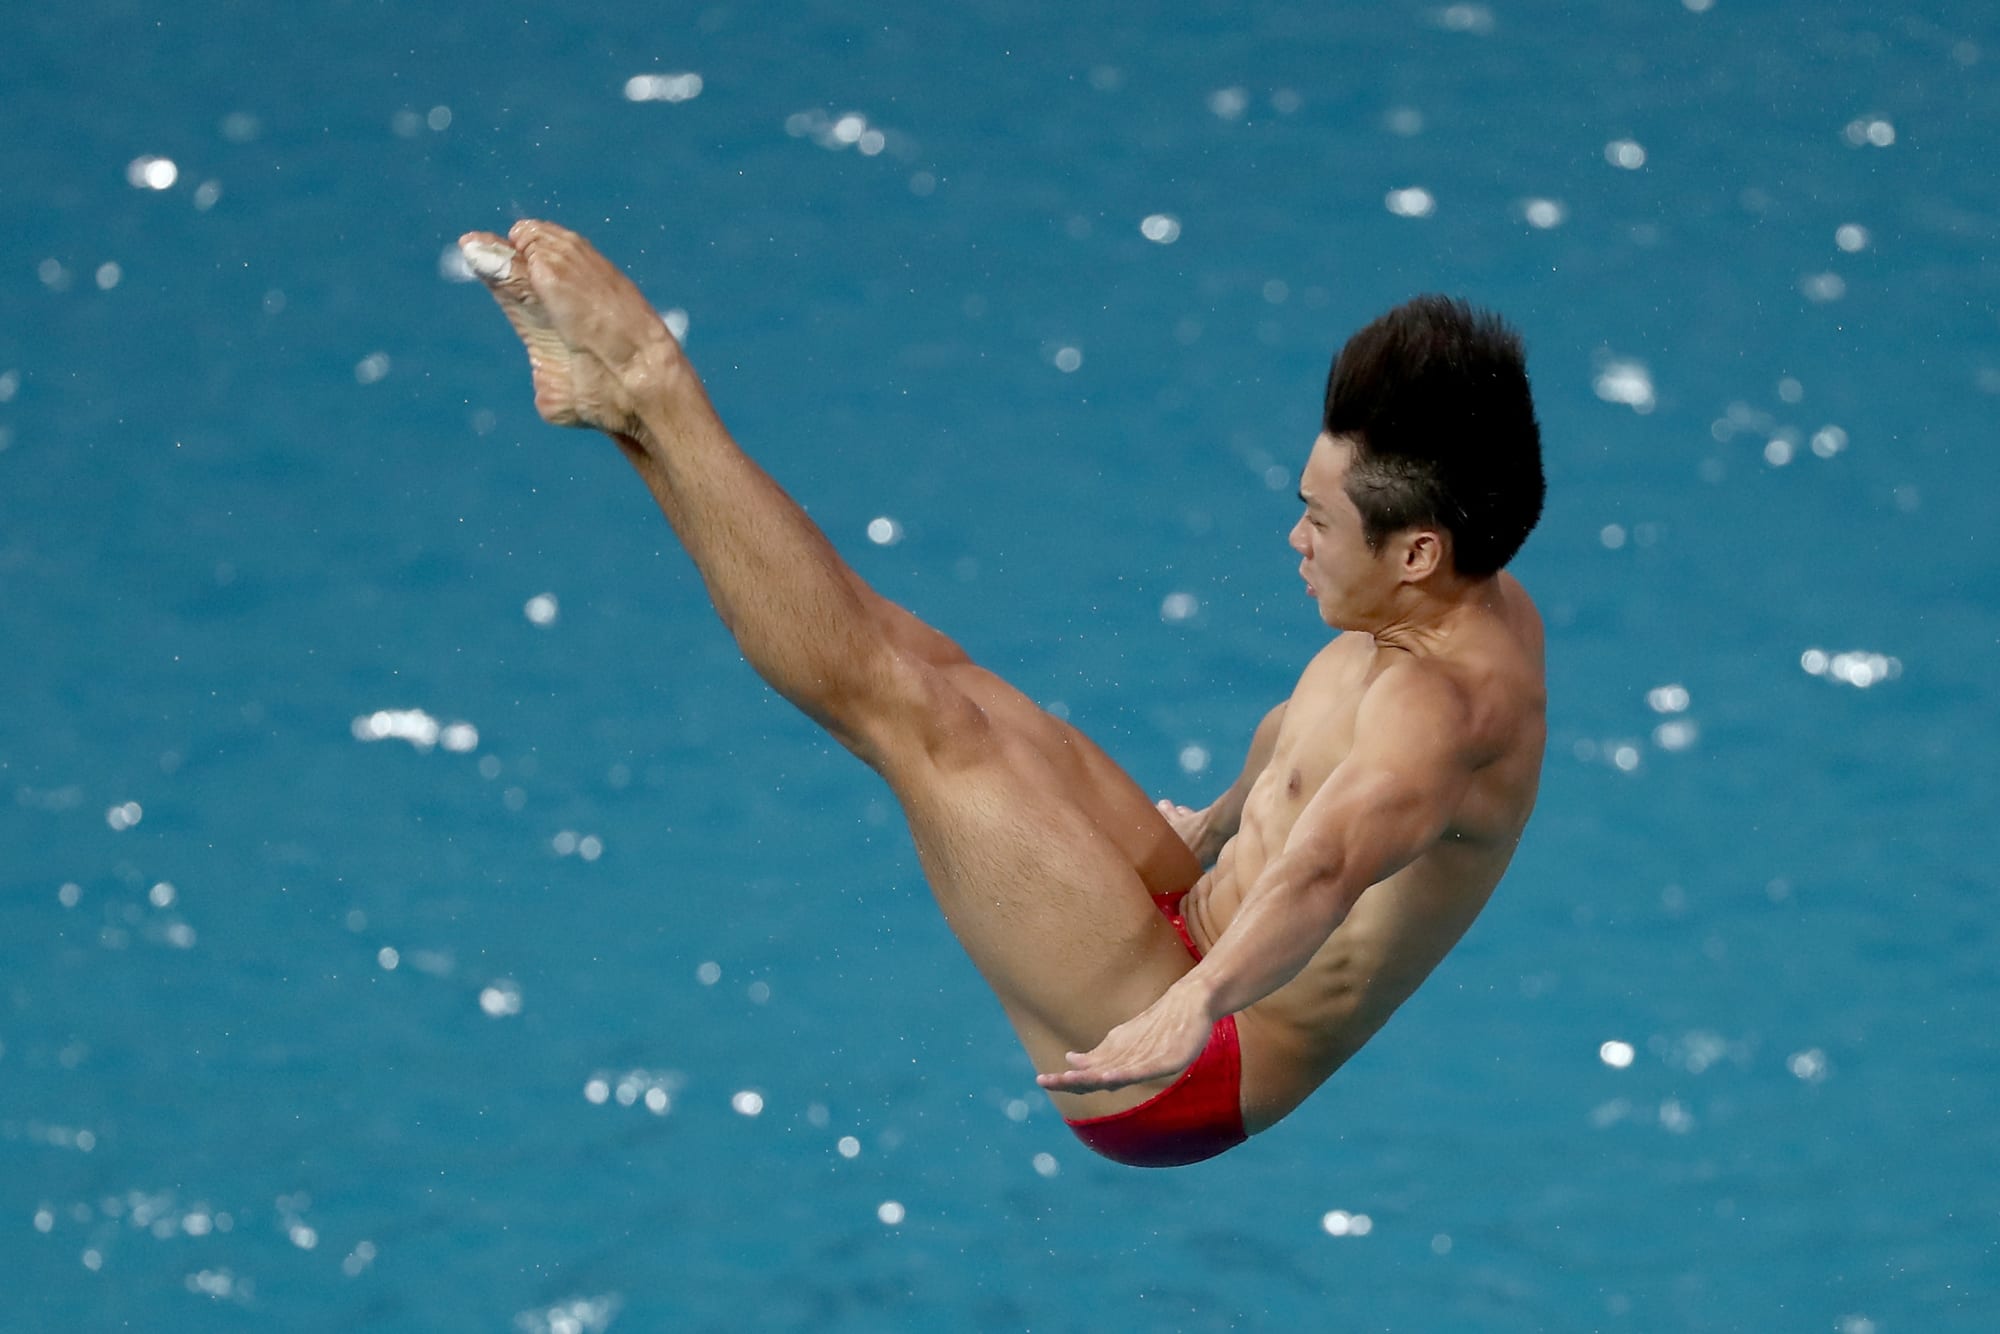 diving commentator olympics nbc rio